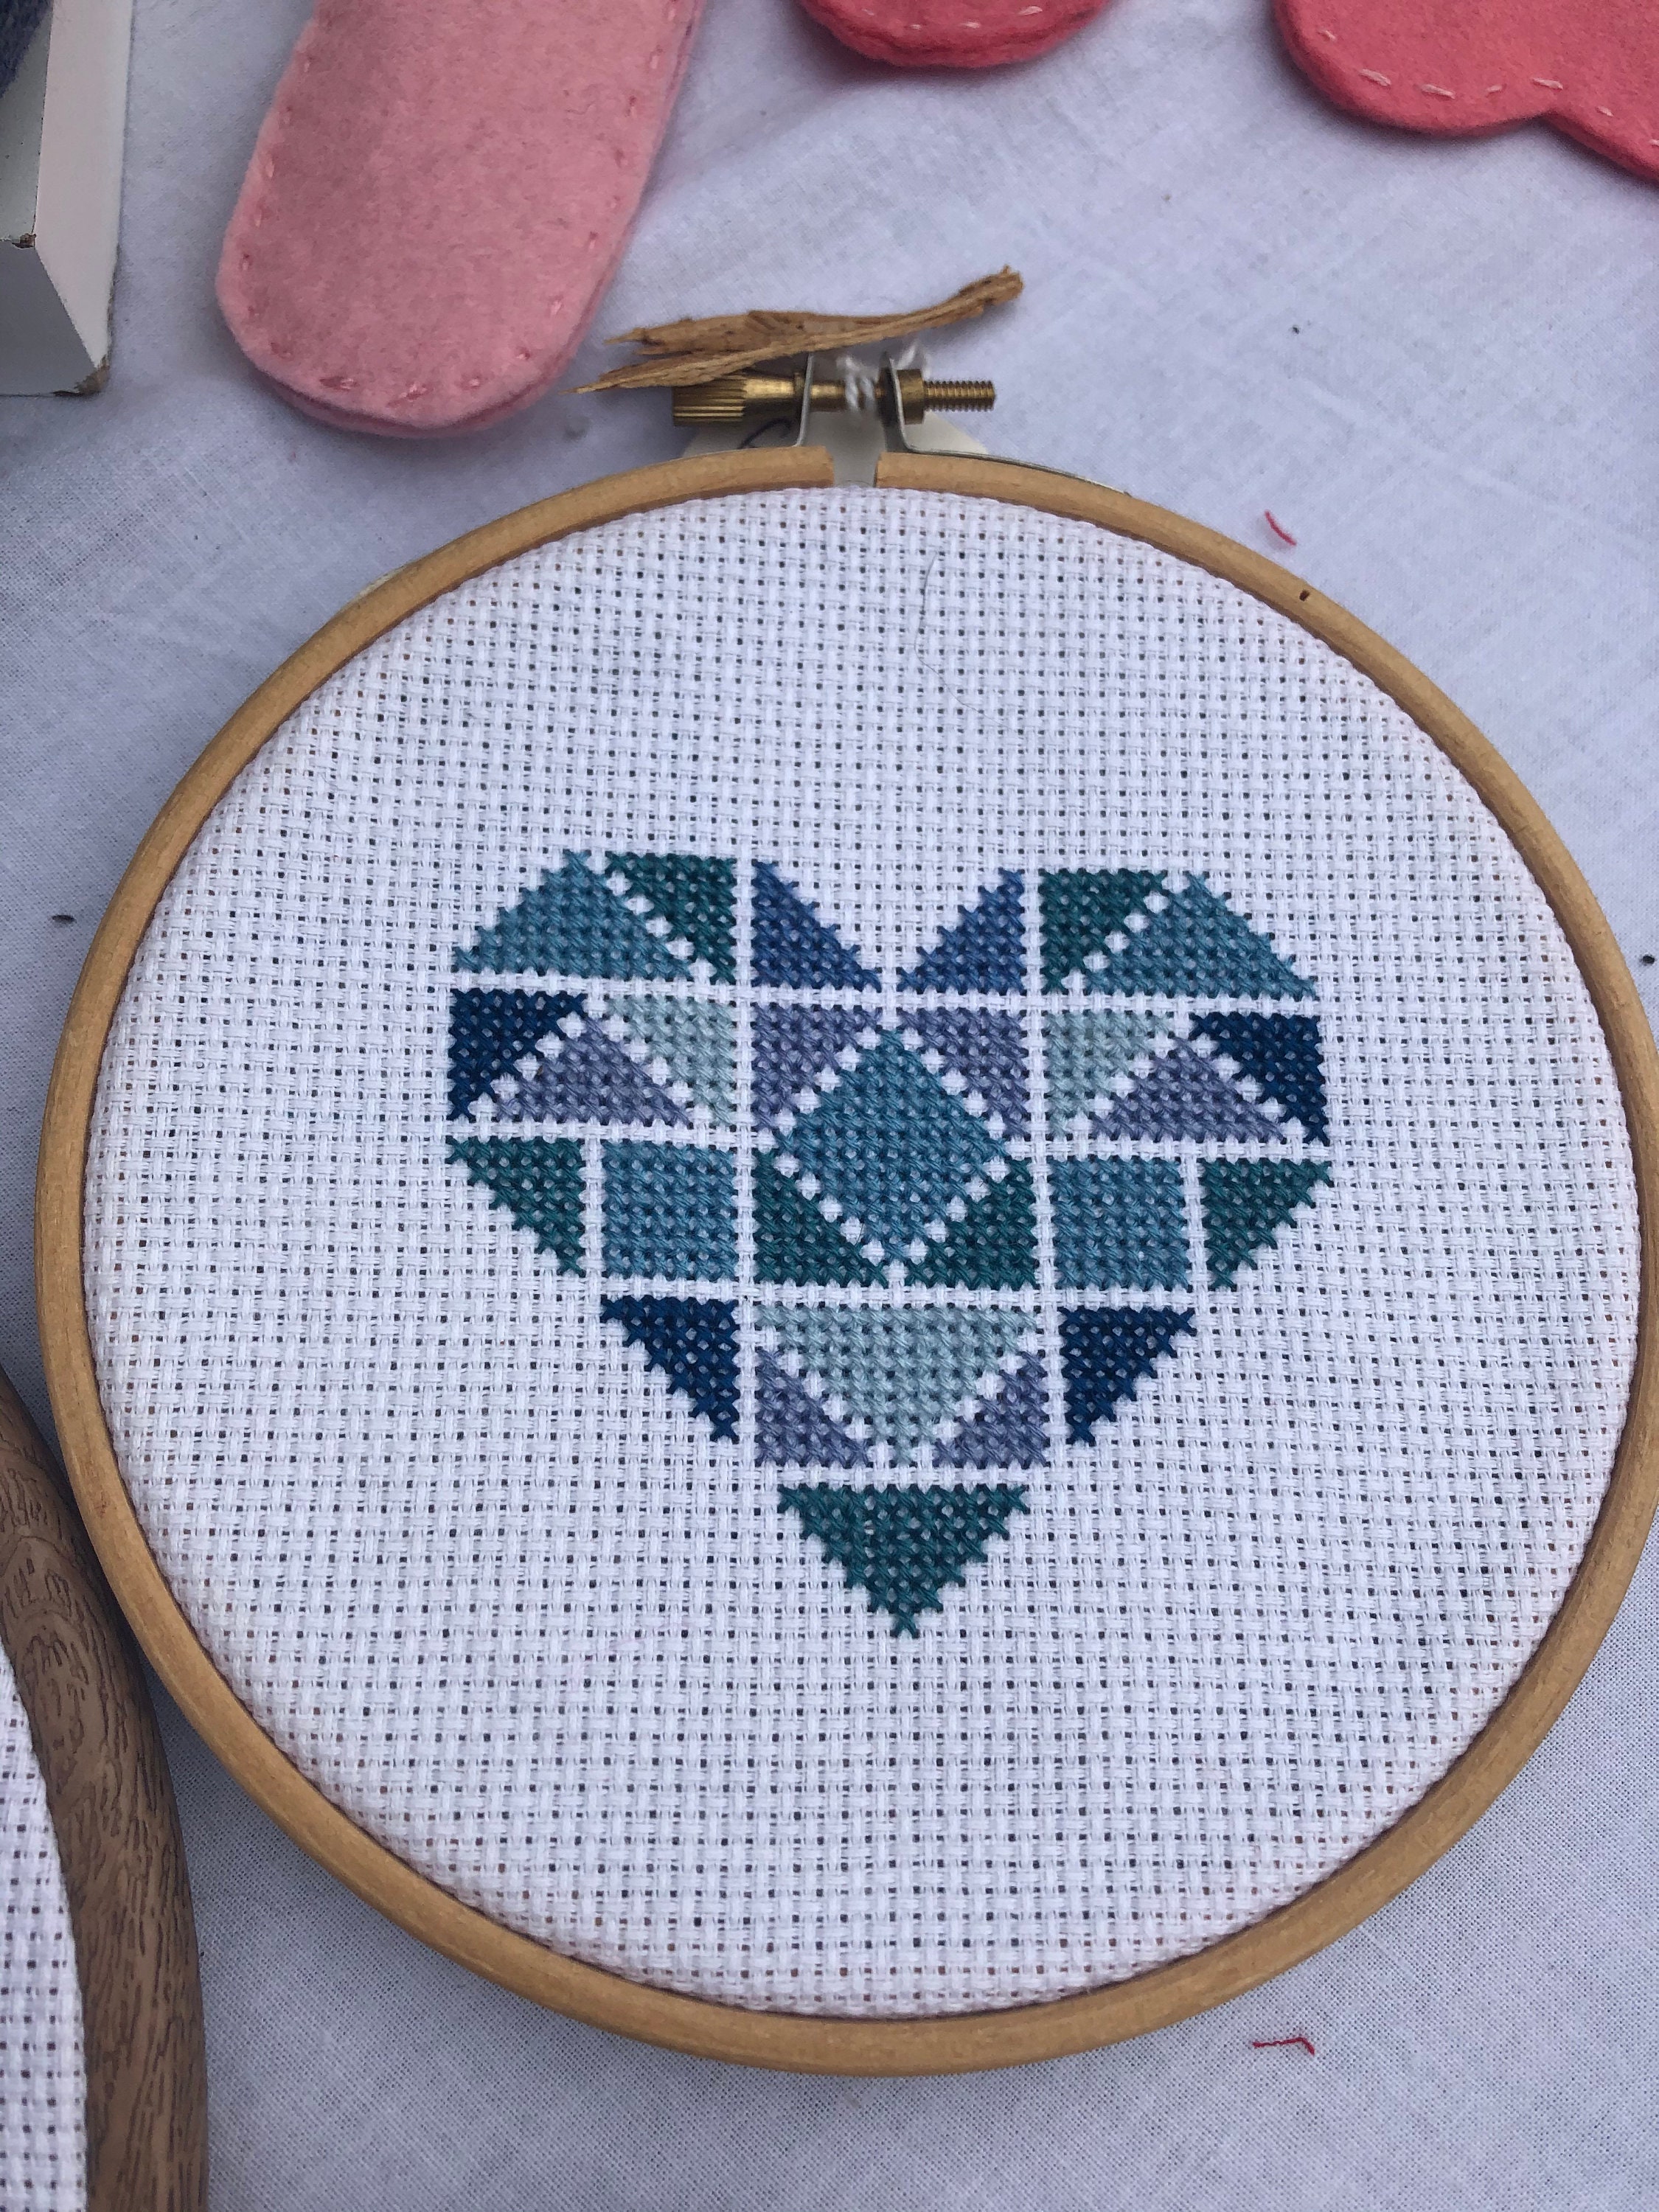 Cross stitch heart | Etsy